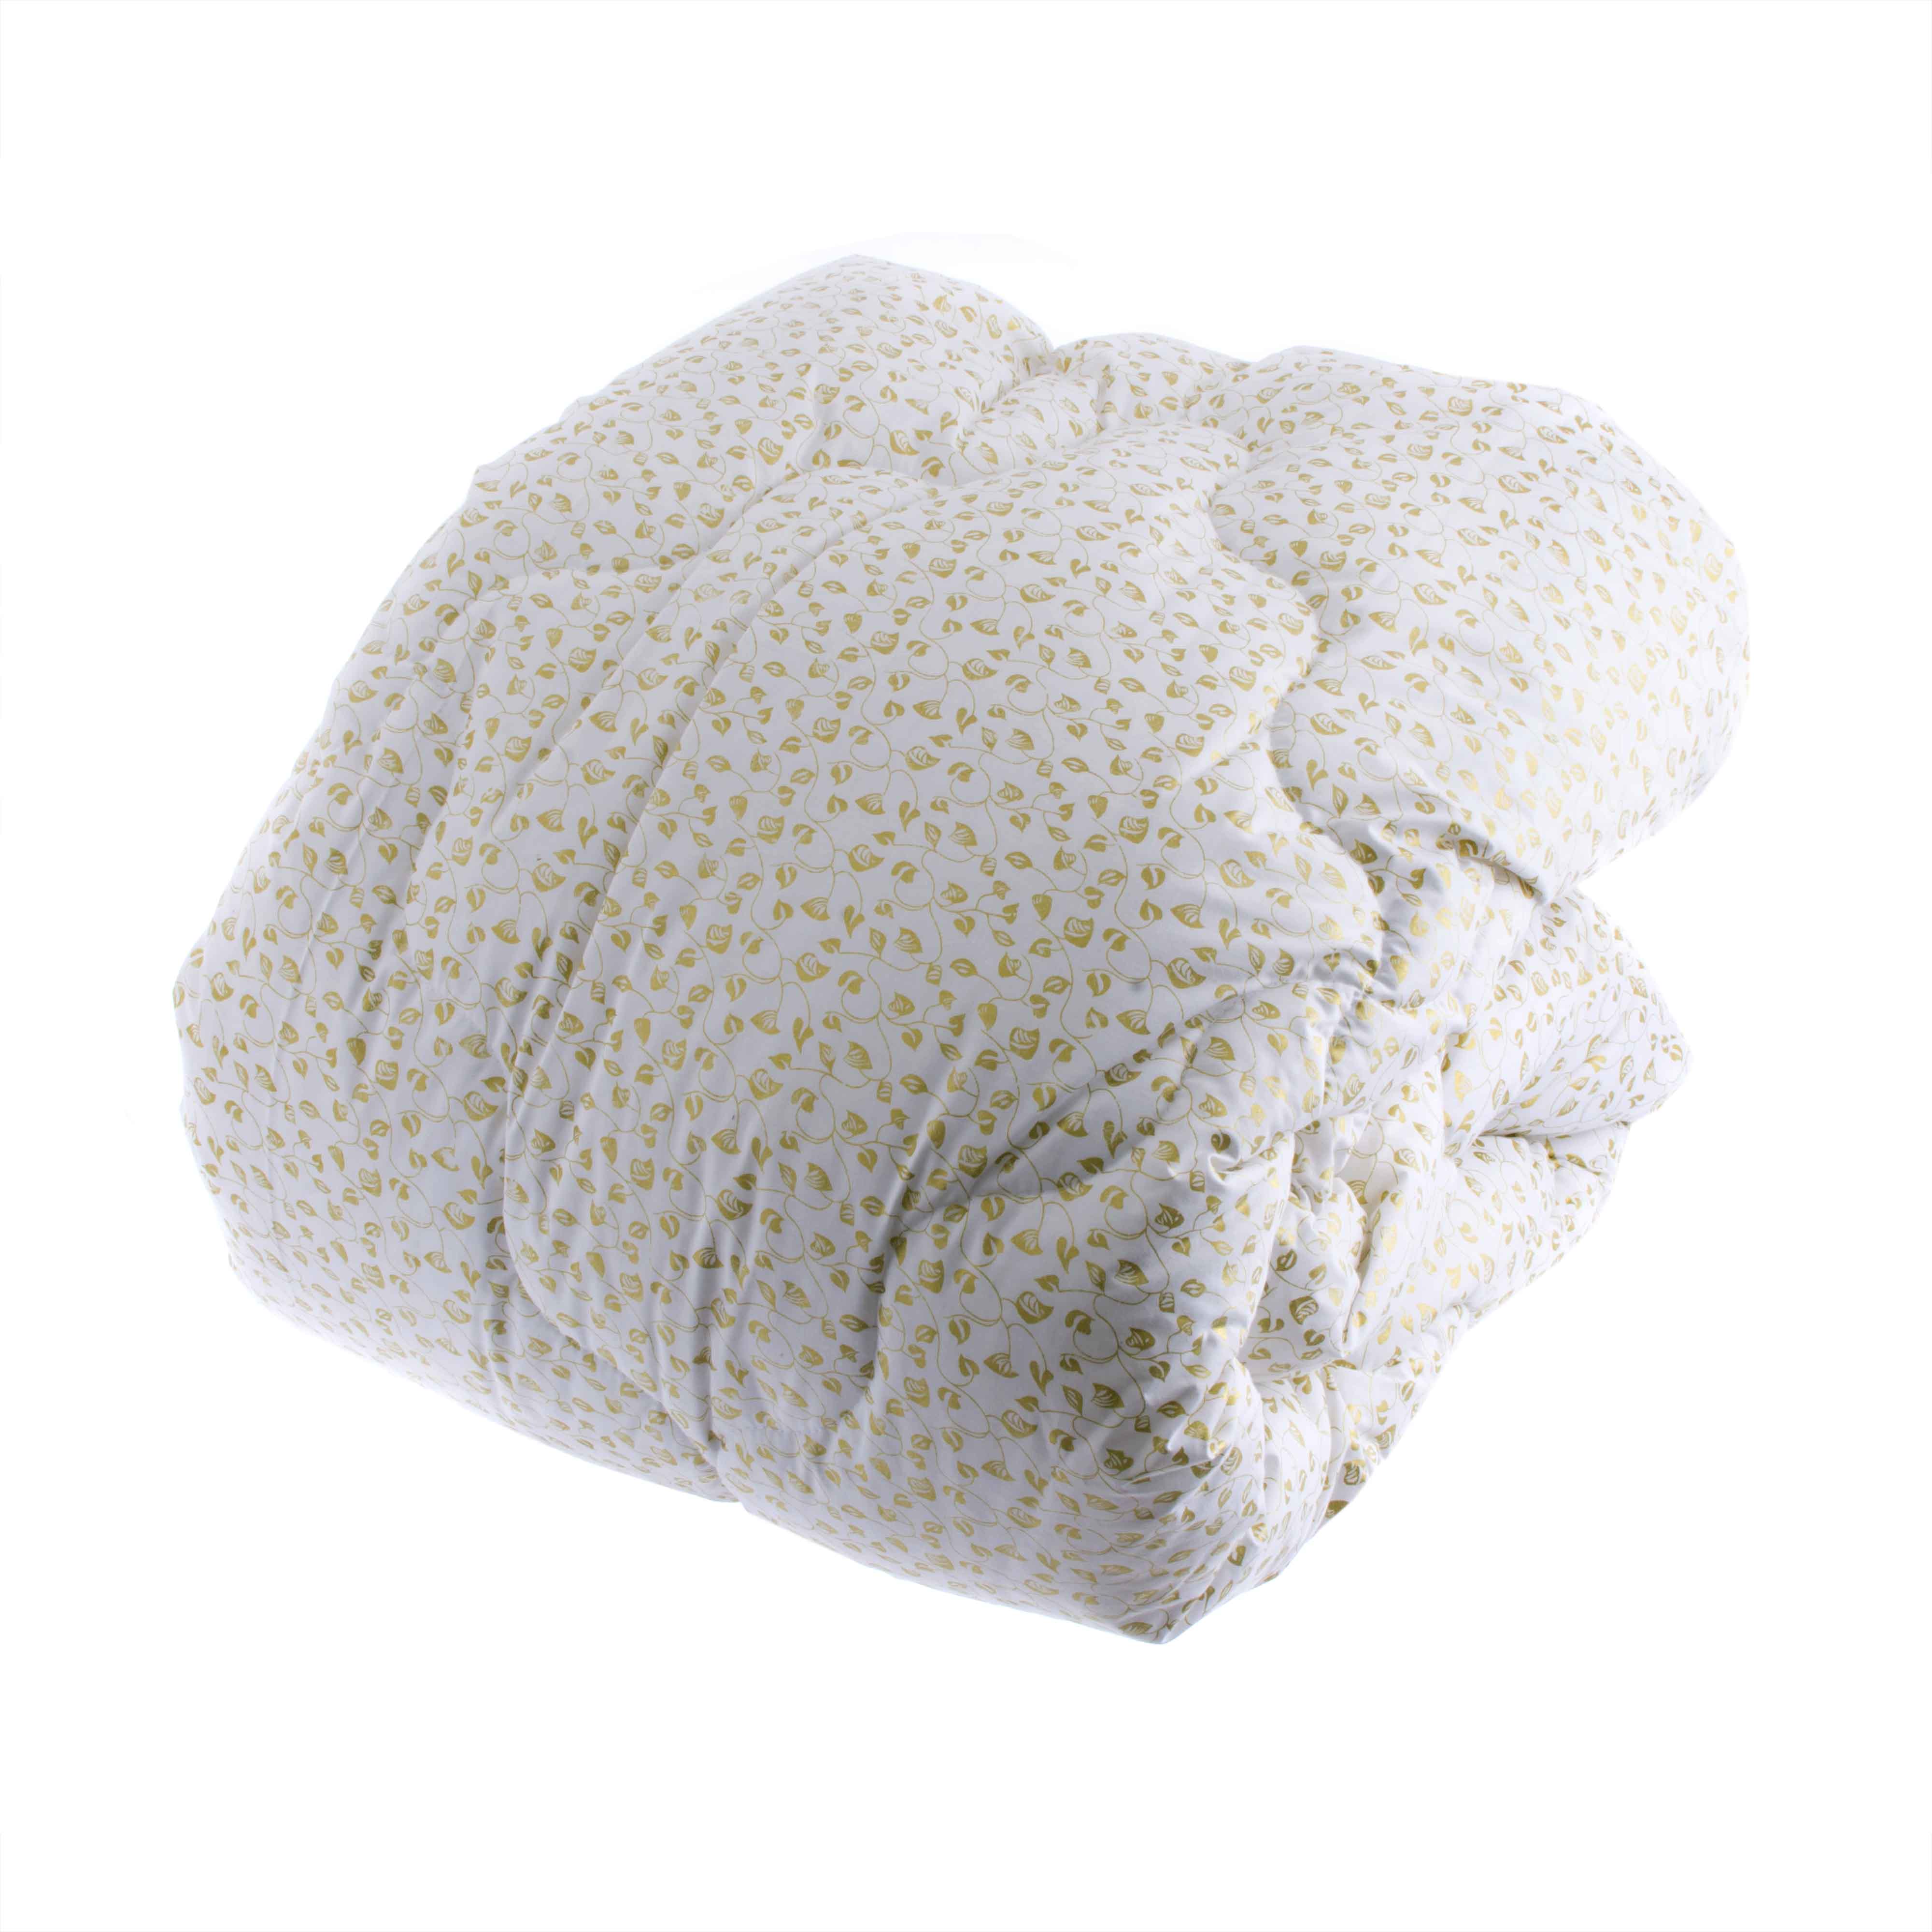 Одеяло лебяжий пух 200x220 Belashoff ОЛП 6 - 3 Э, размер 200х220 см - фото 2